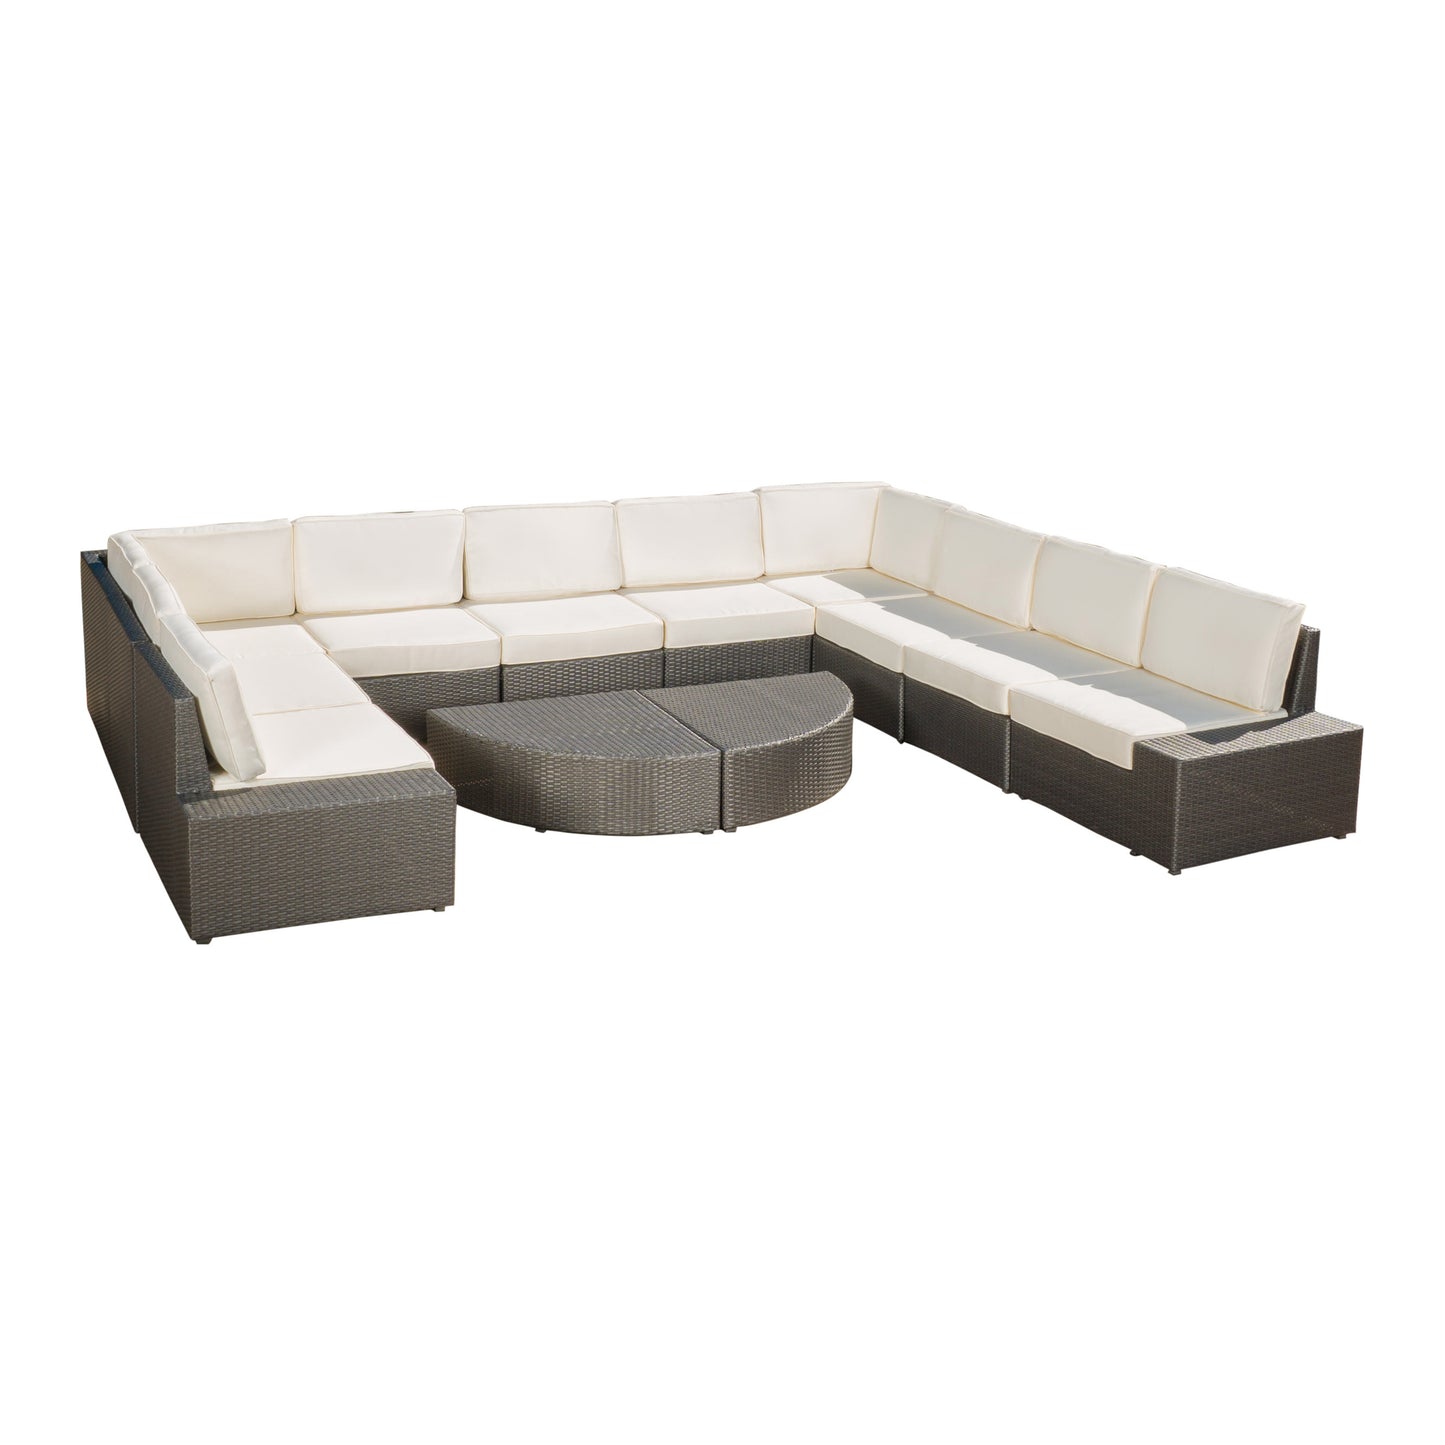 Reddington 12pc Outdoor Wicker Sectional Sofa Set w/ Cushions